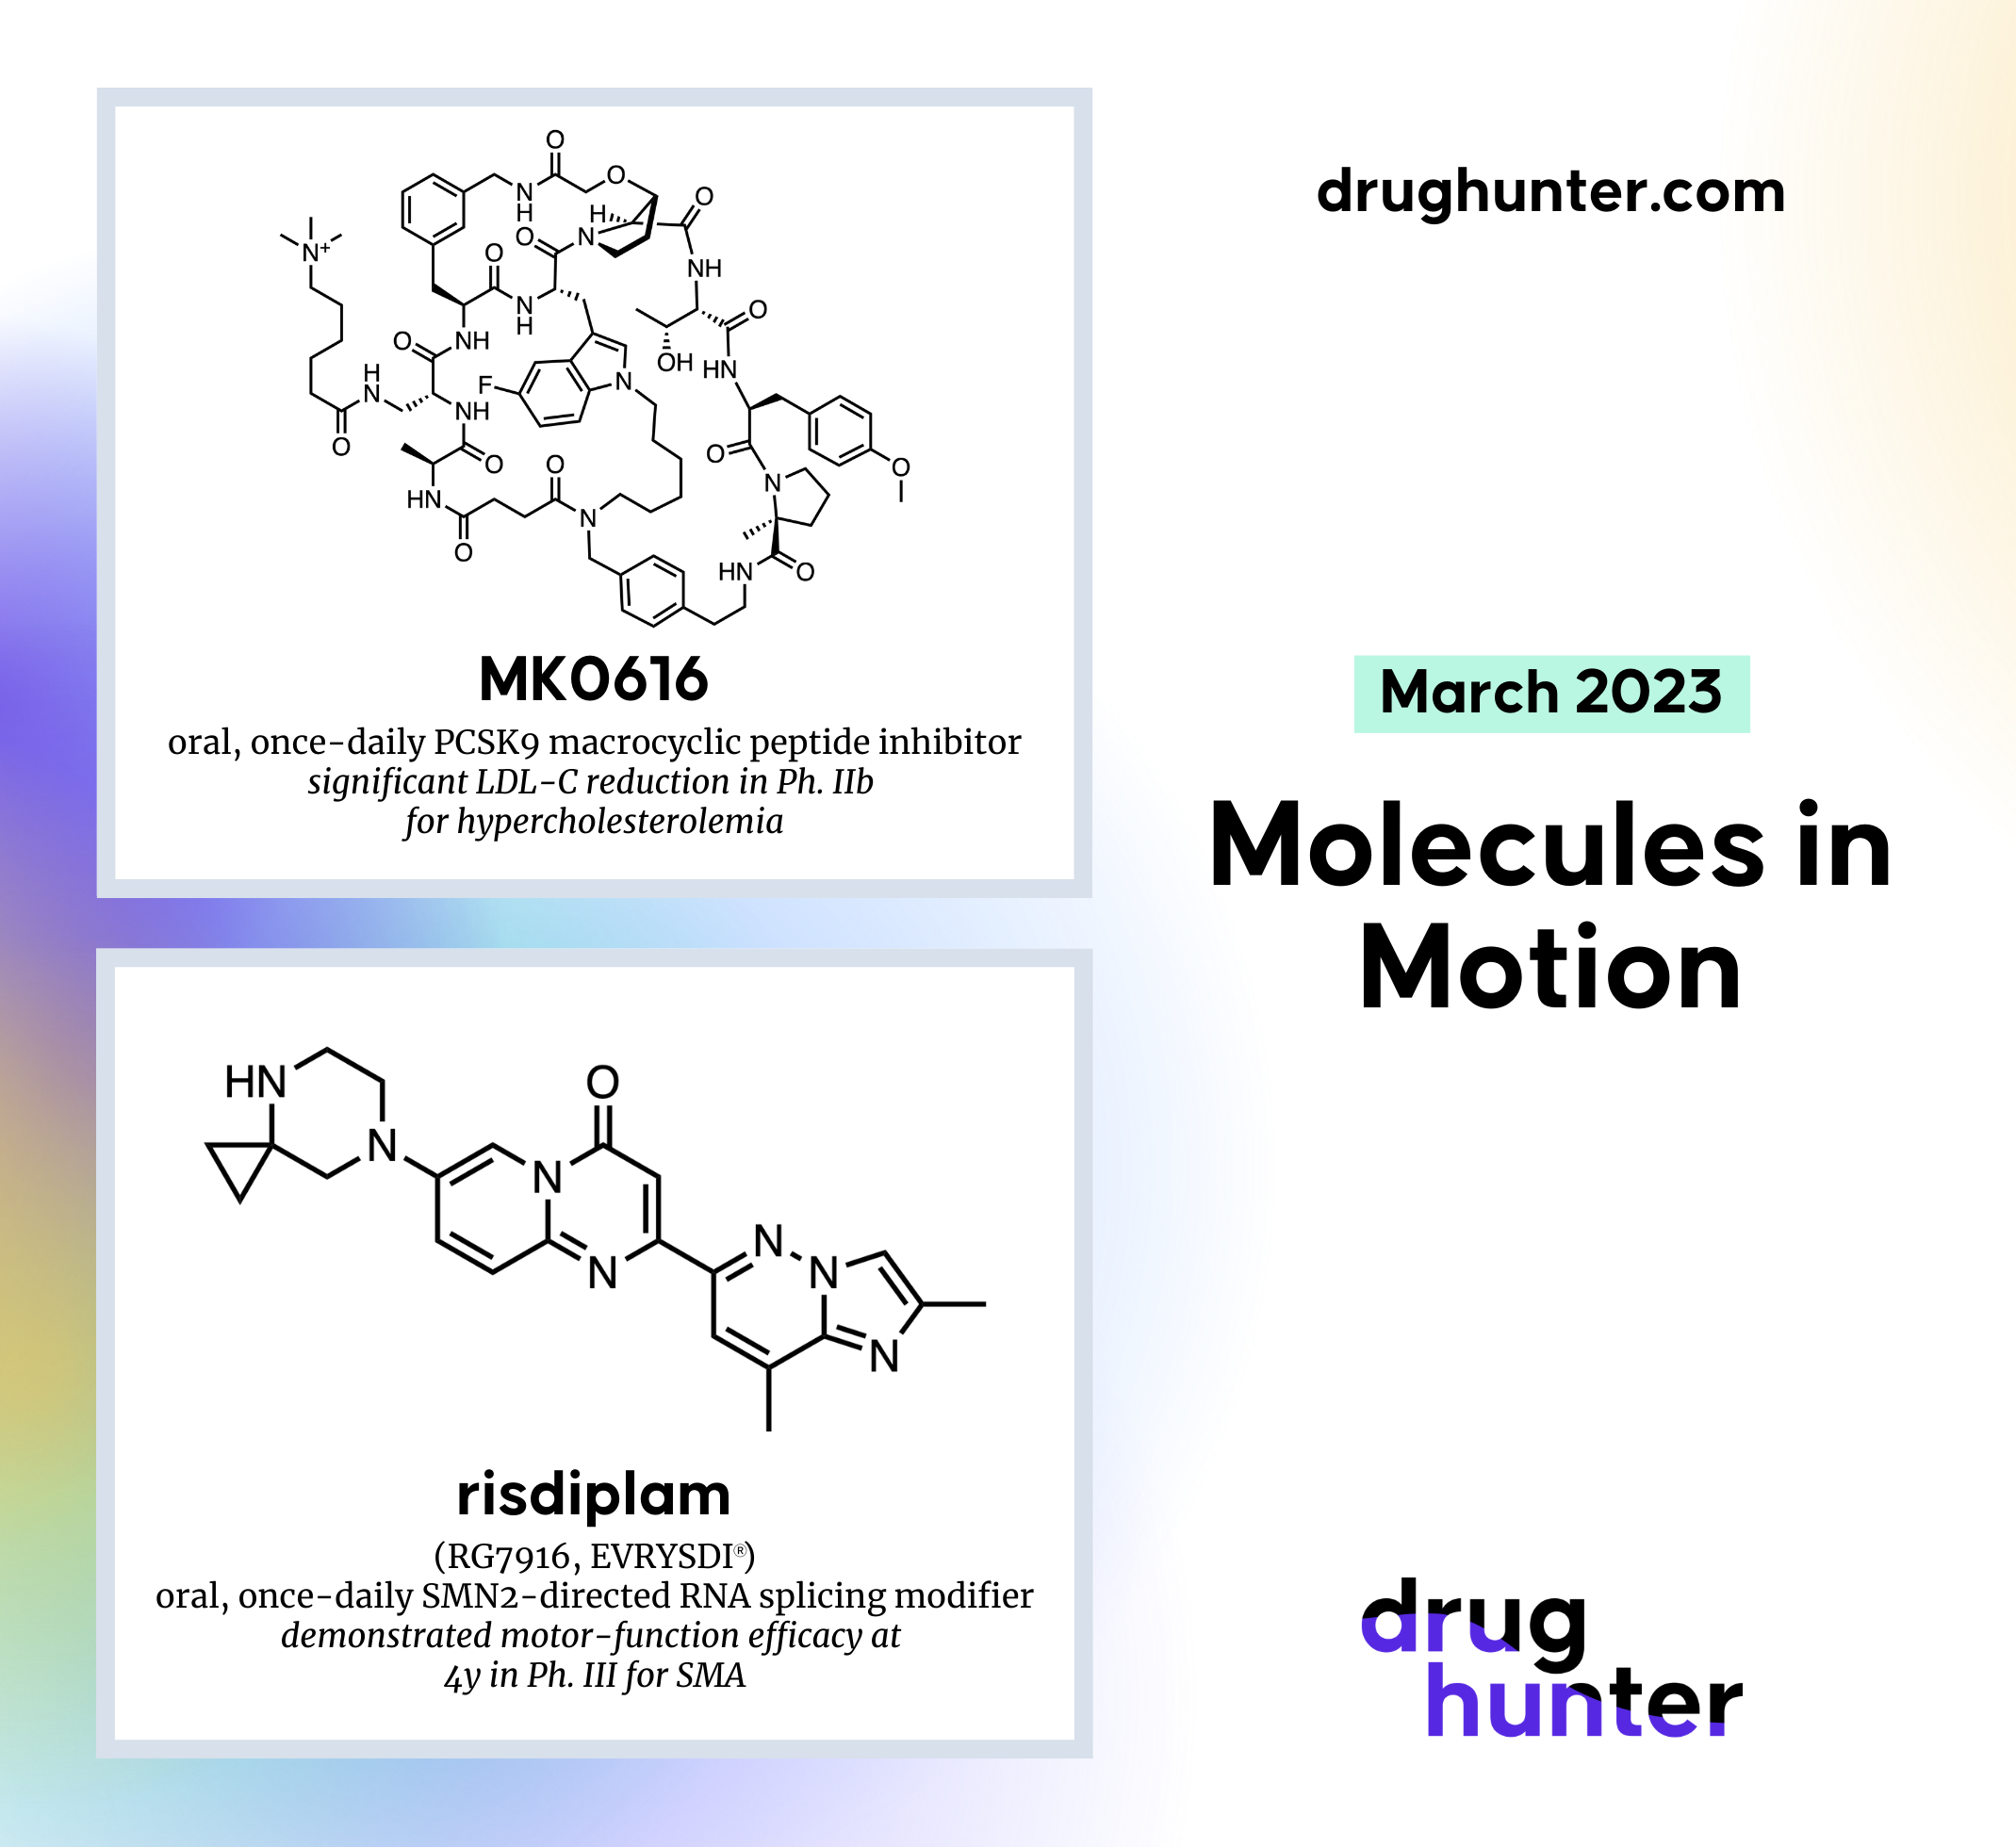 molecules in motion, march 2023, MK0616, risdiplam|||||||||||